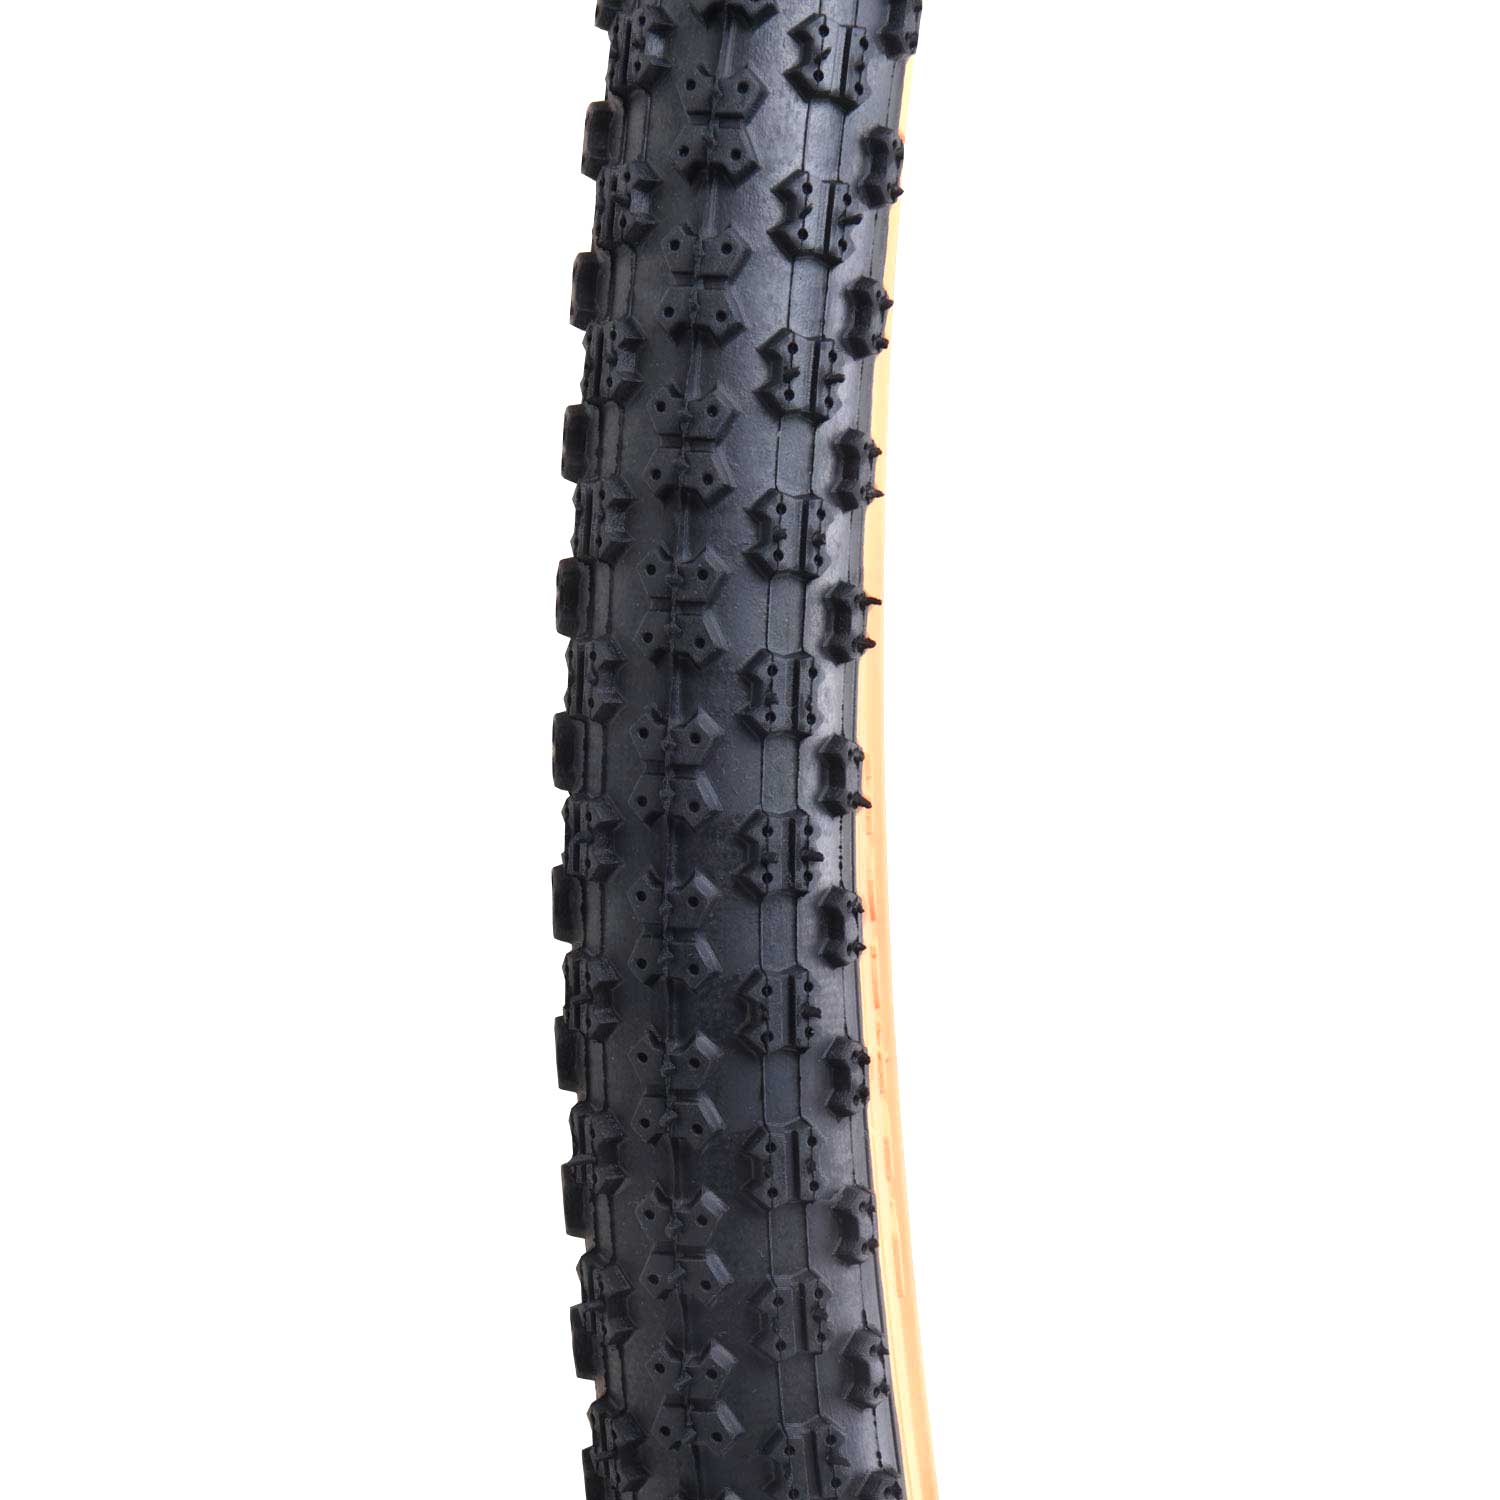 Fahrraddecke P 24x1,75 Standard schwarz/braun